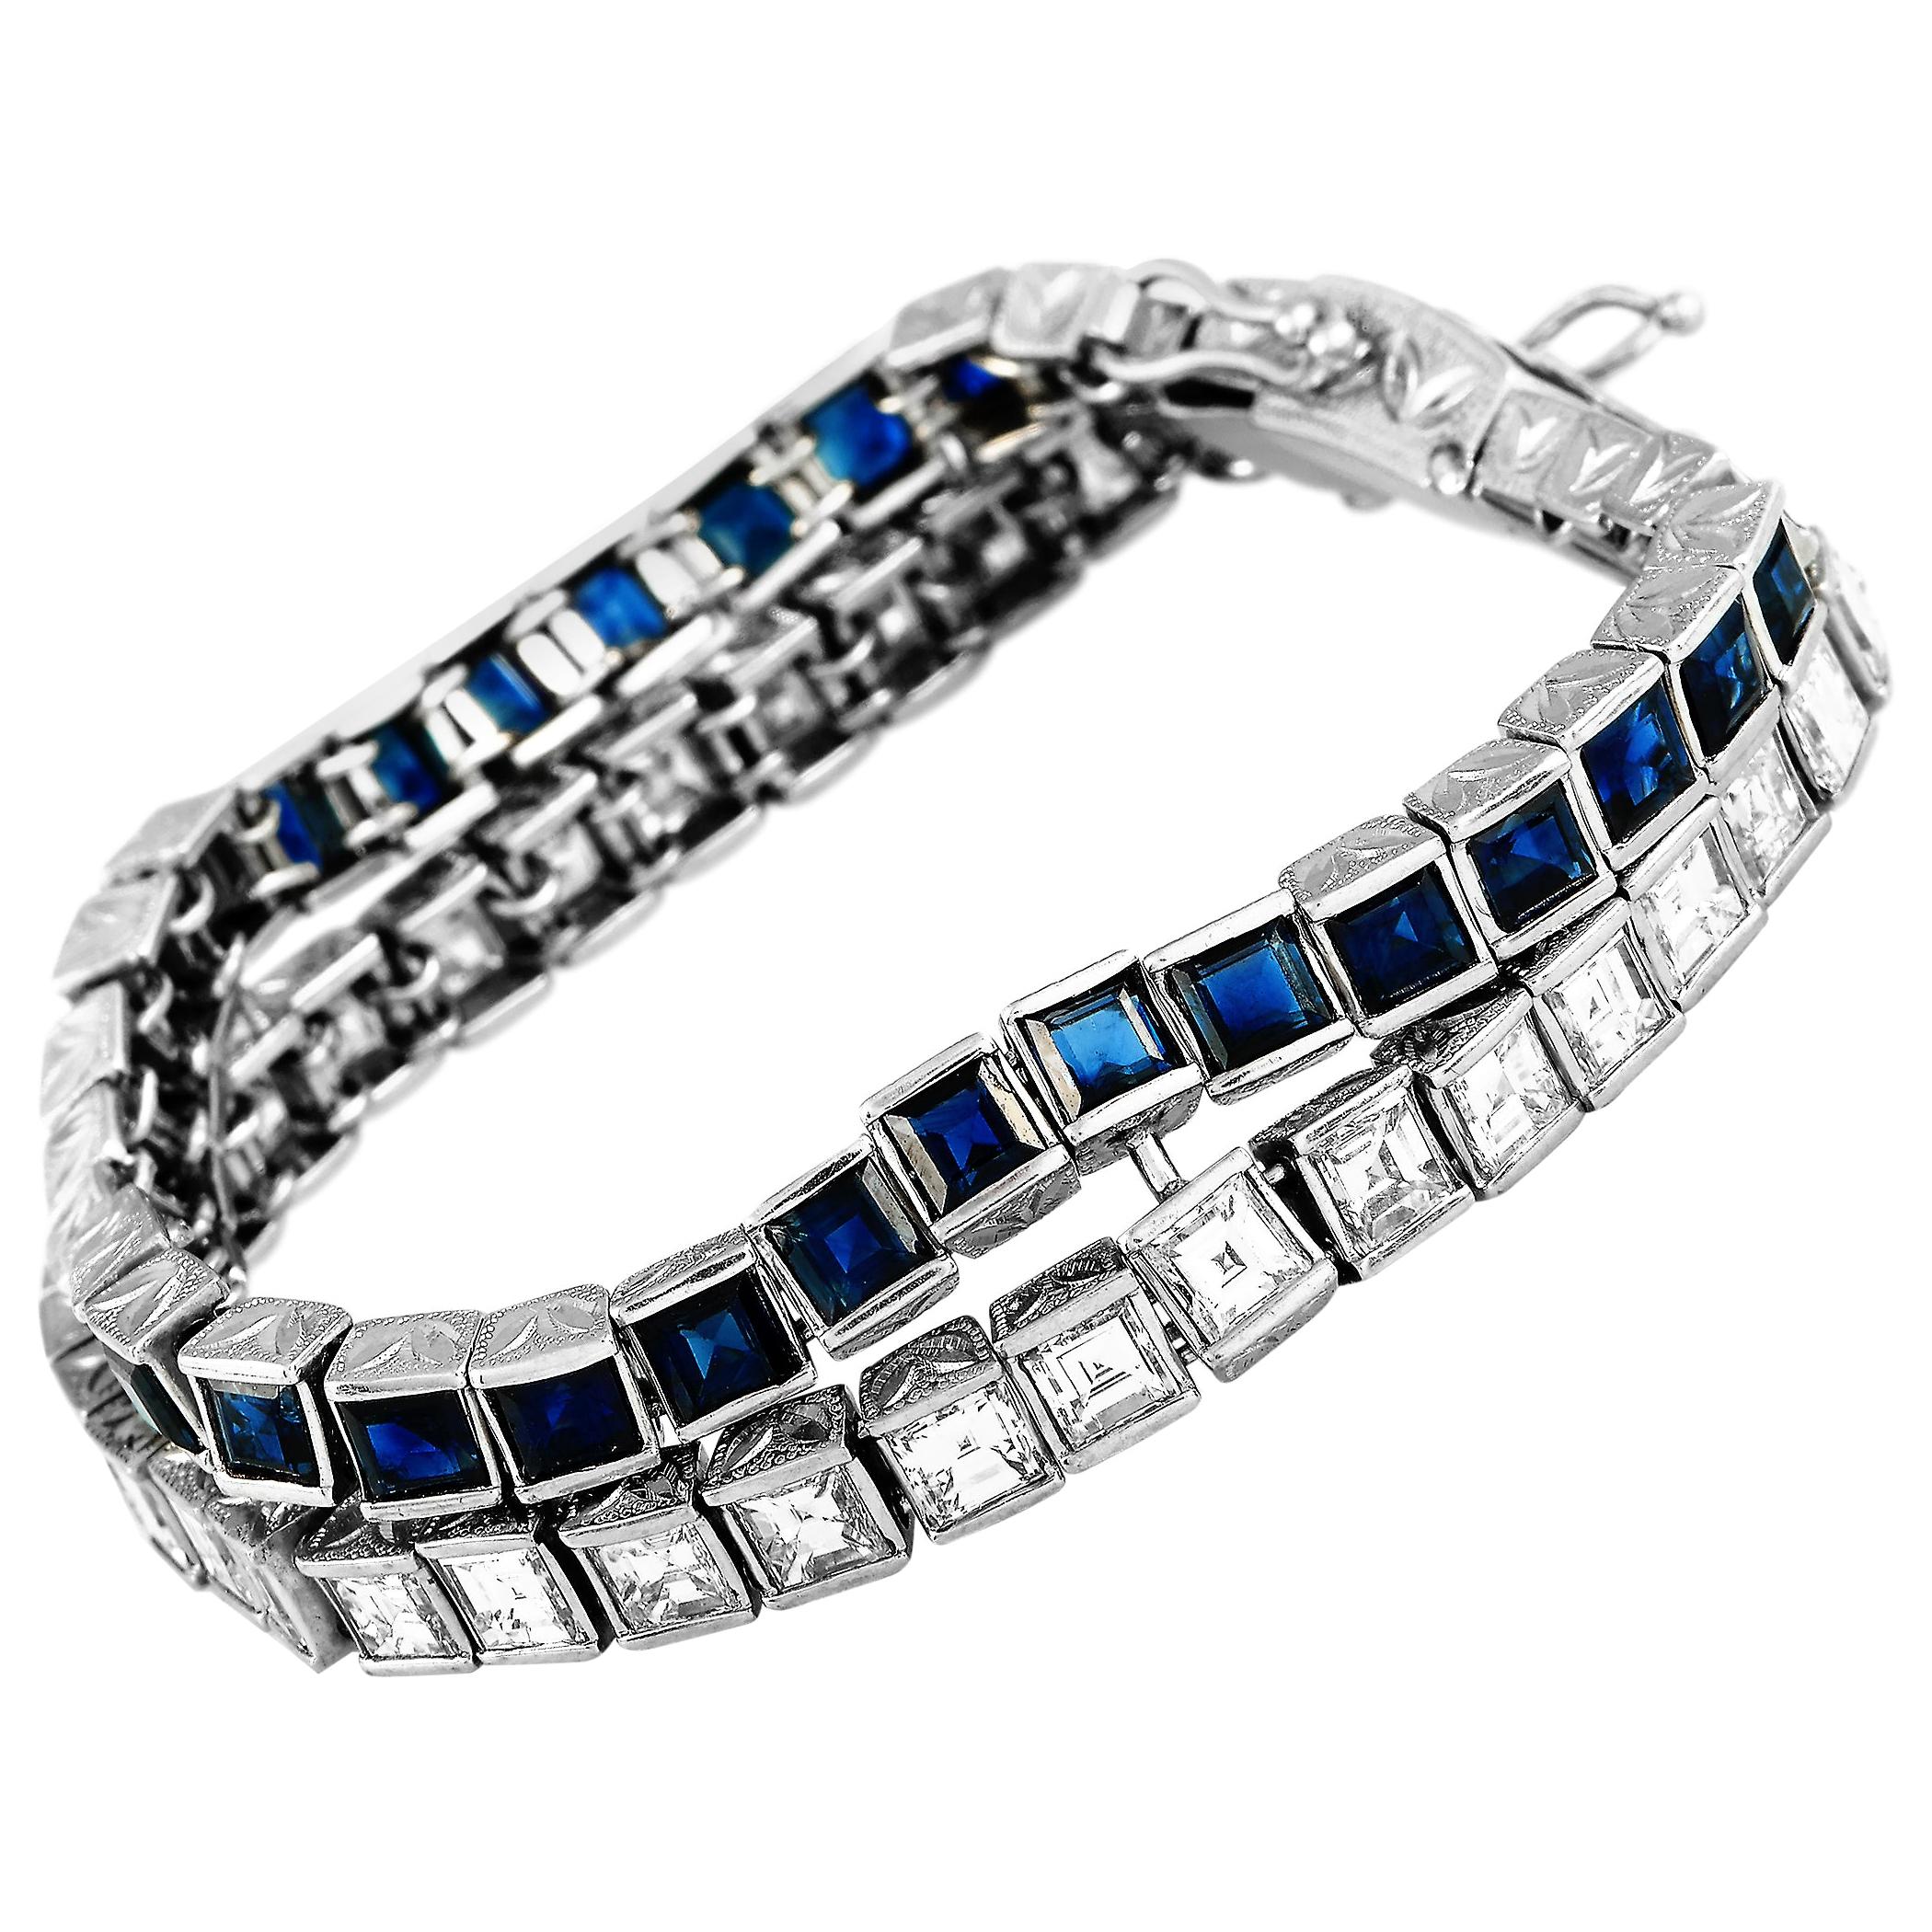 LB Exclusive Platinum 10.72 Carat Diamond and 13.50 Carat Sapphire Bracelet